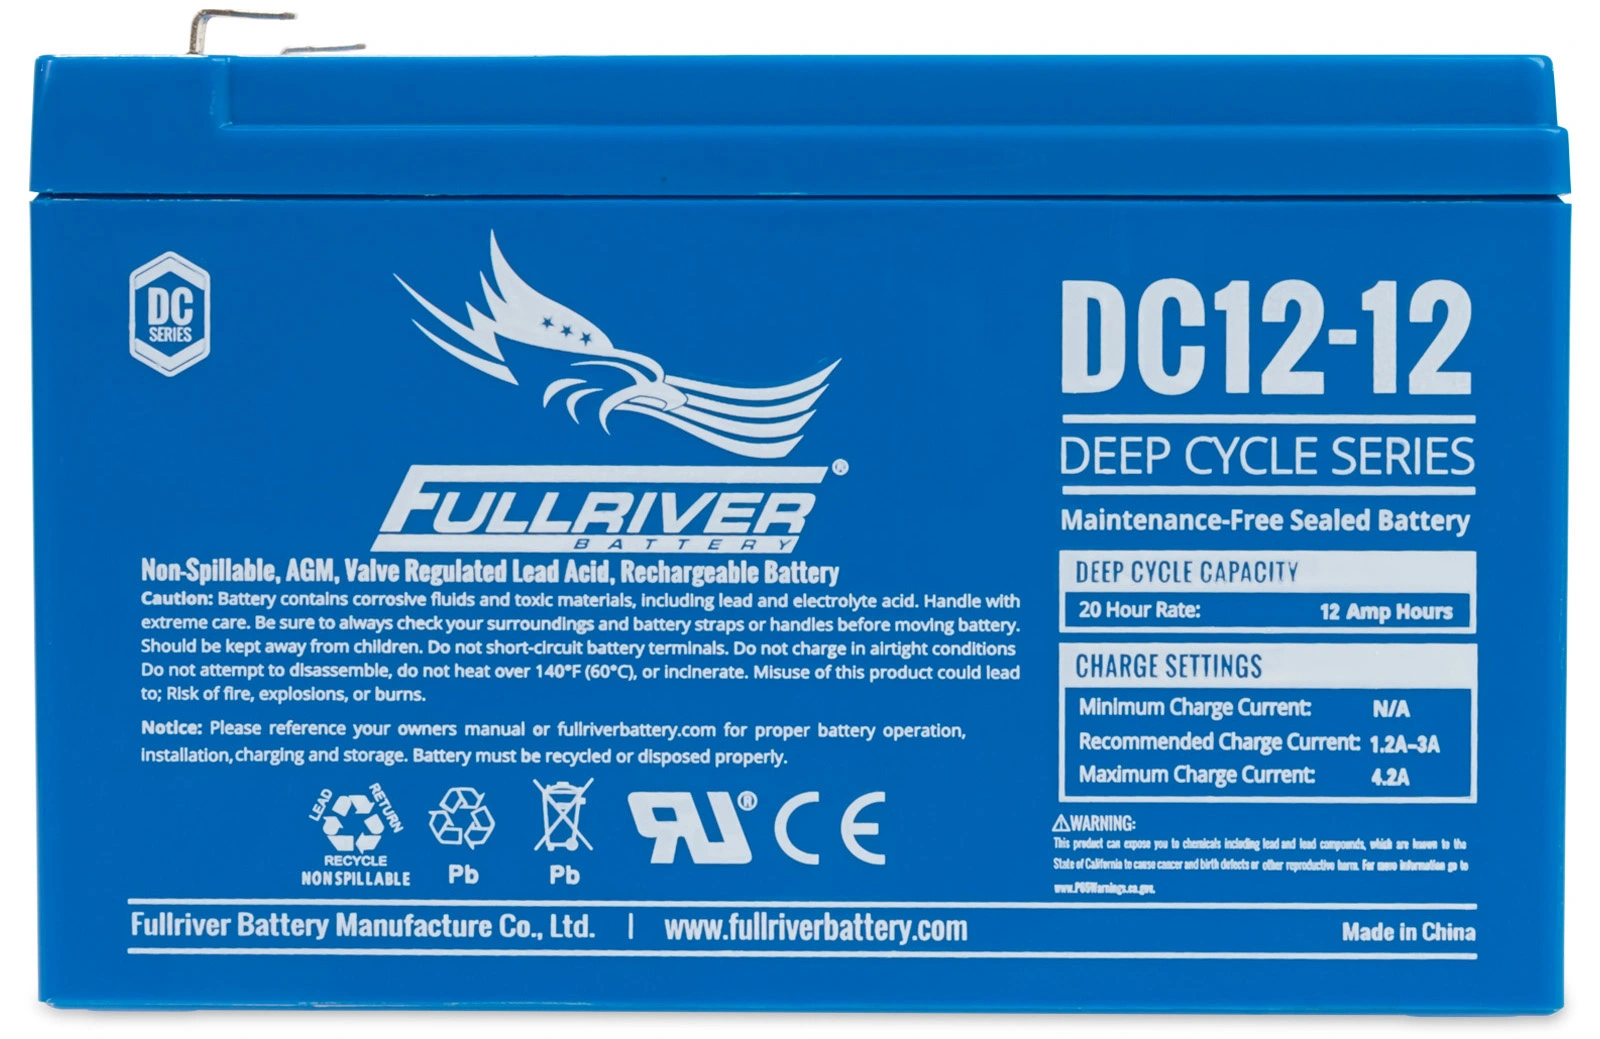 DC12-12 Battery from Fullriver Battery